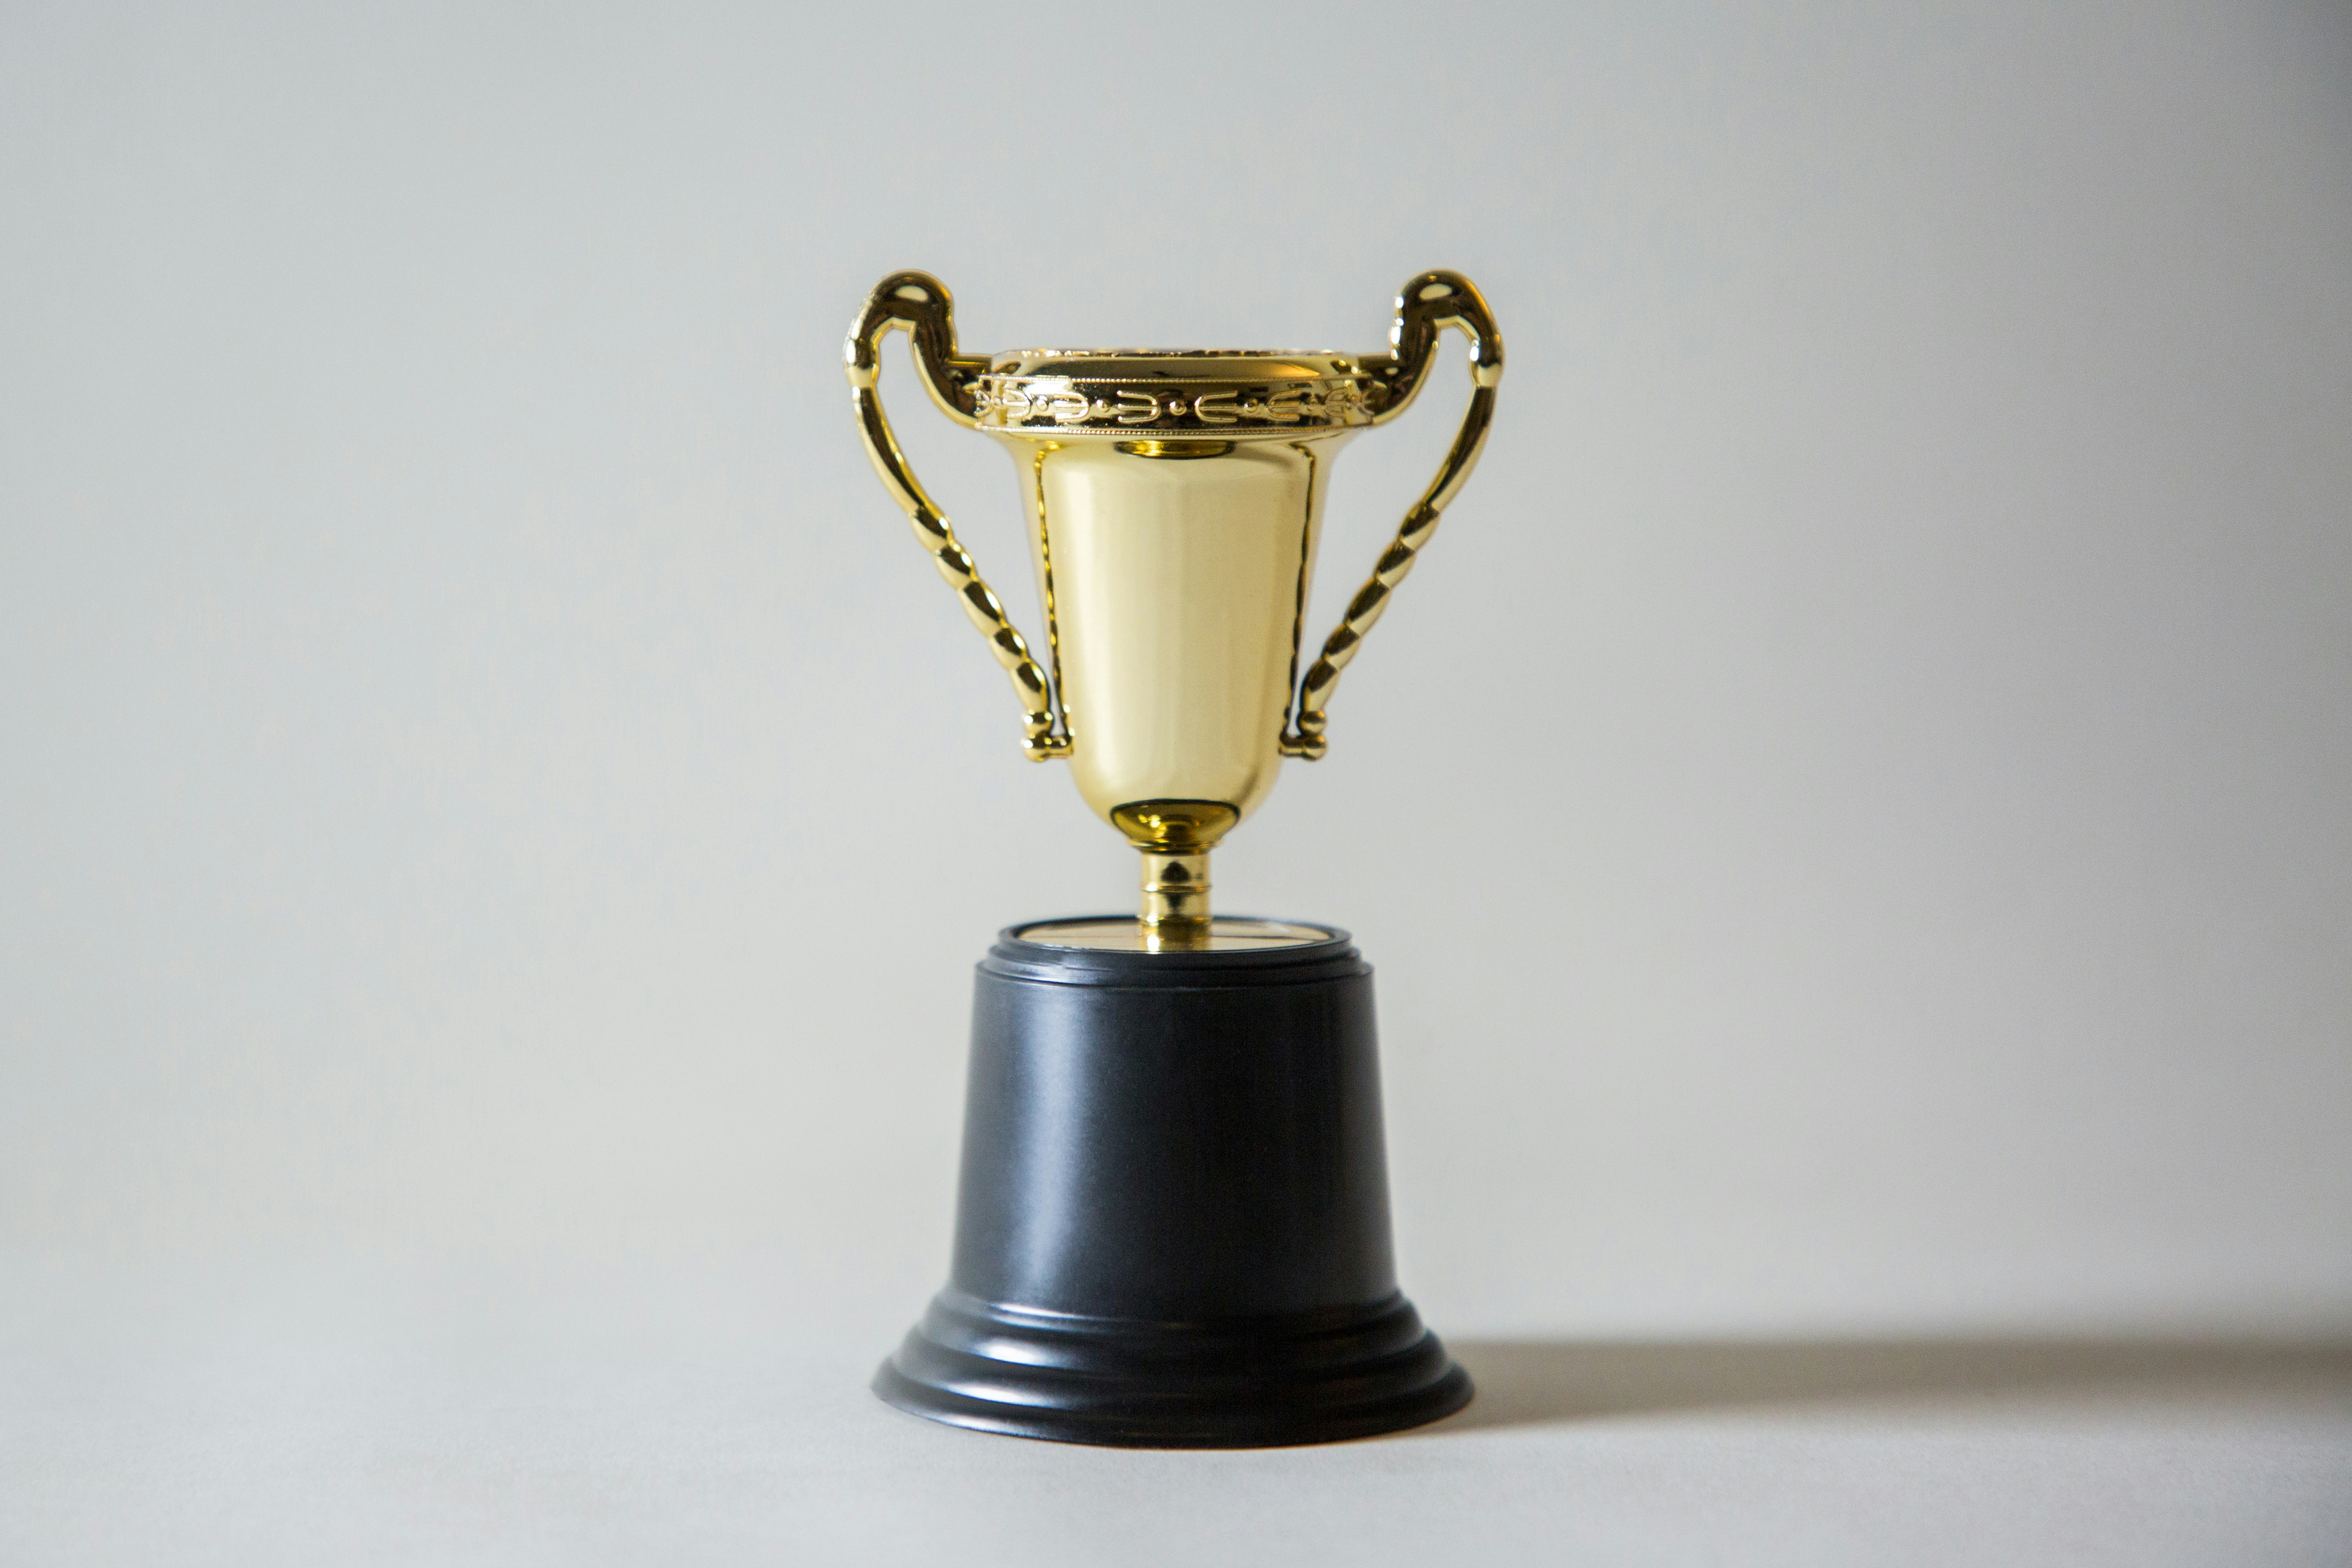 Nexudus wins big across multiple categories at Infotech awards